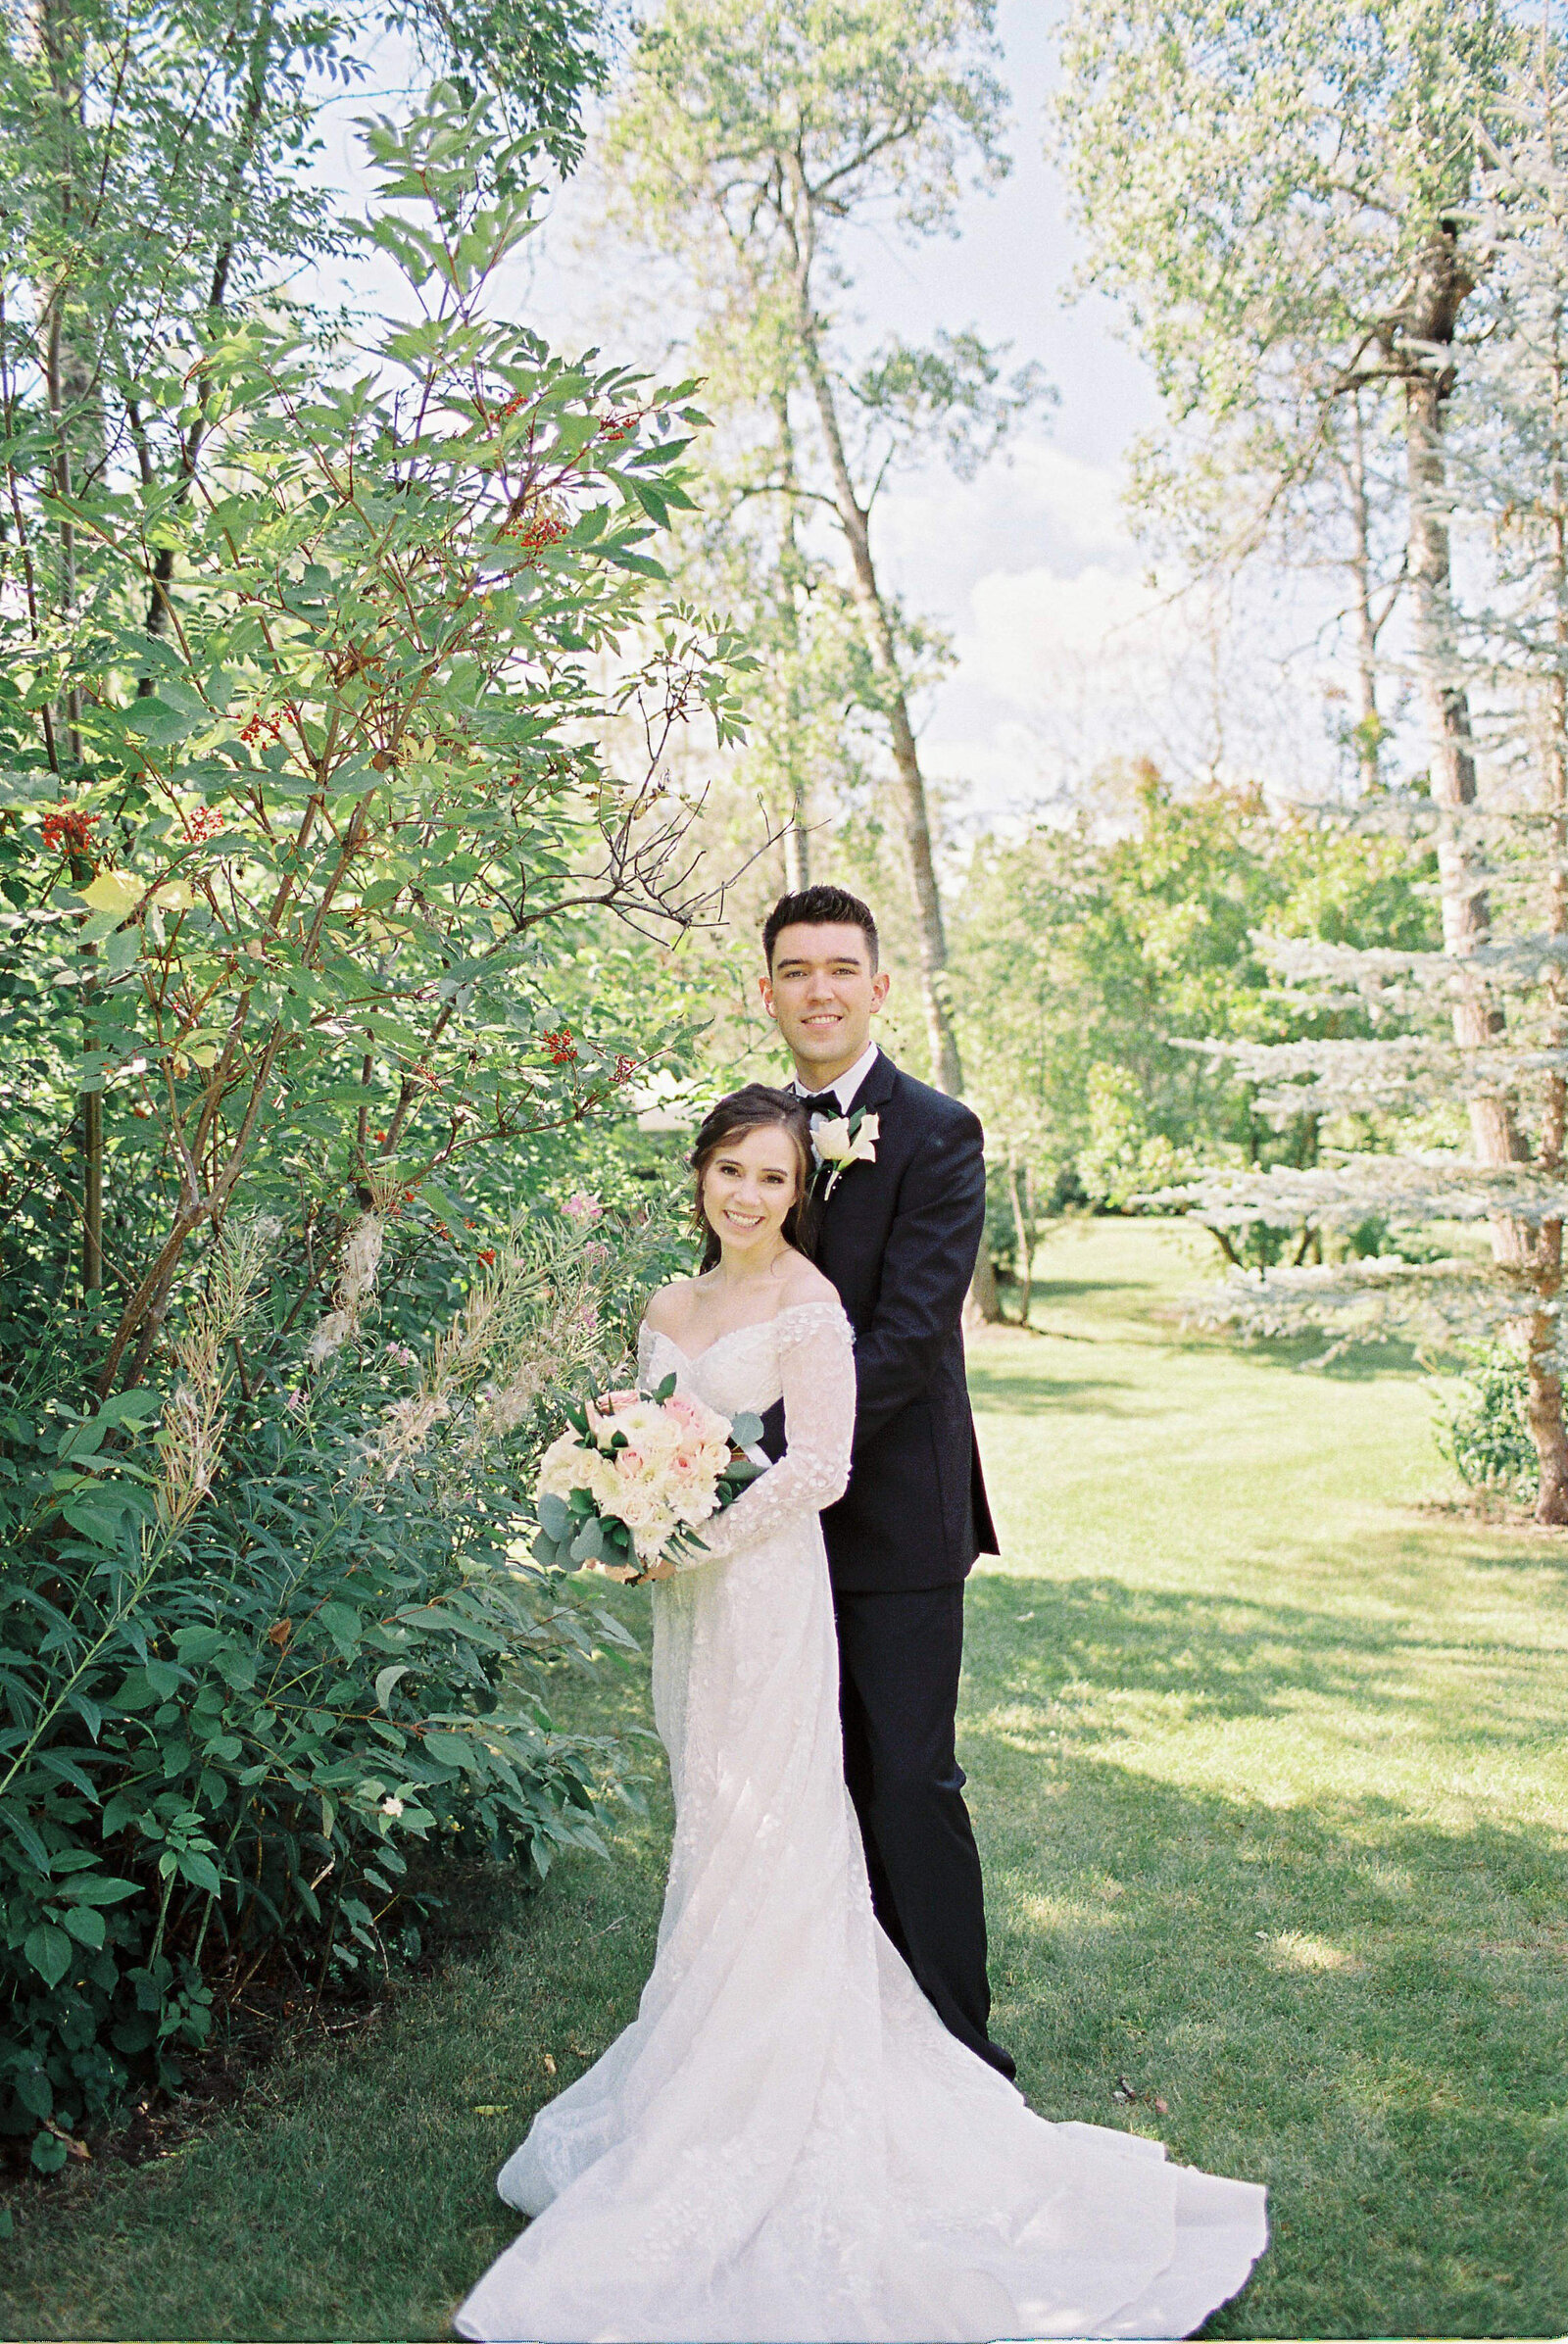 Wedding Photo in Backyard